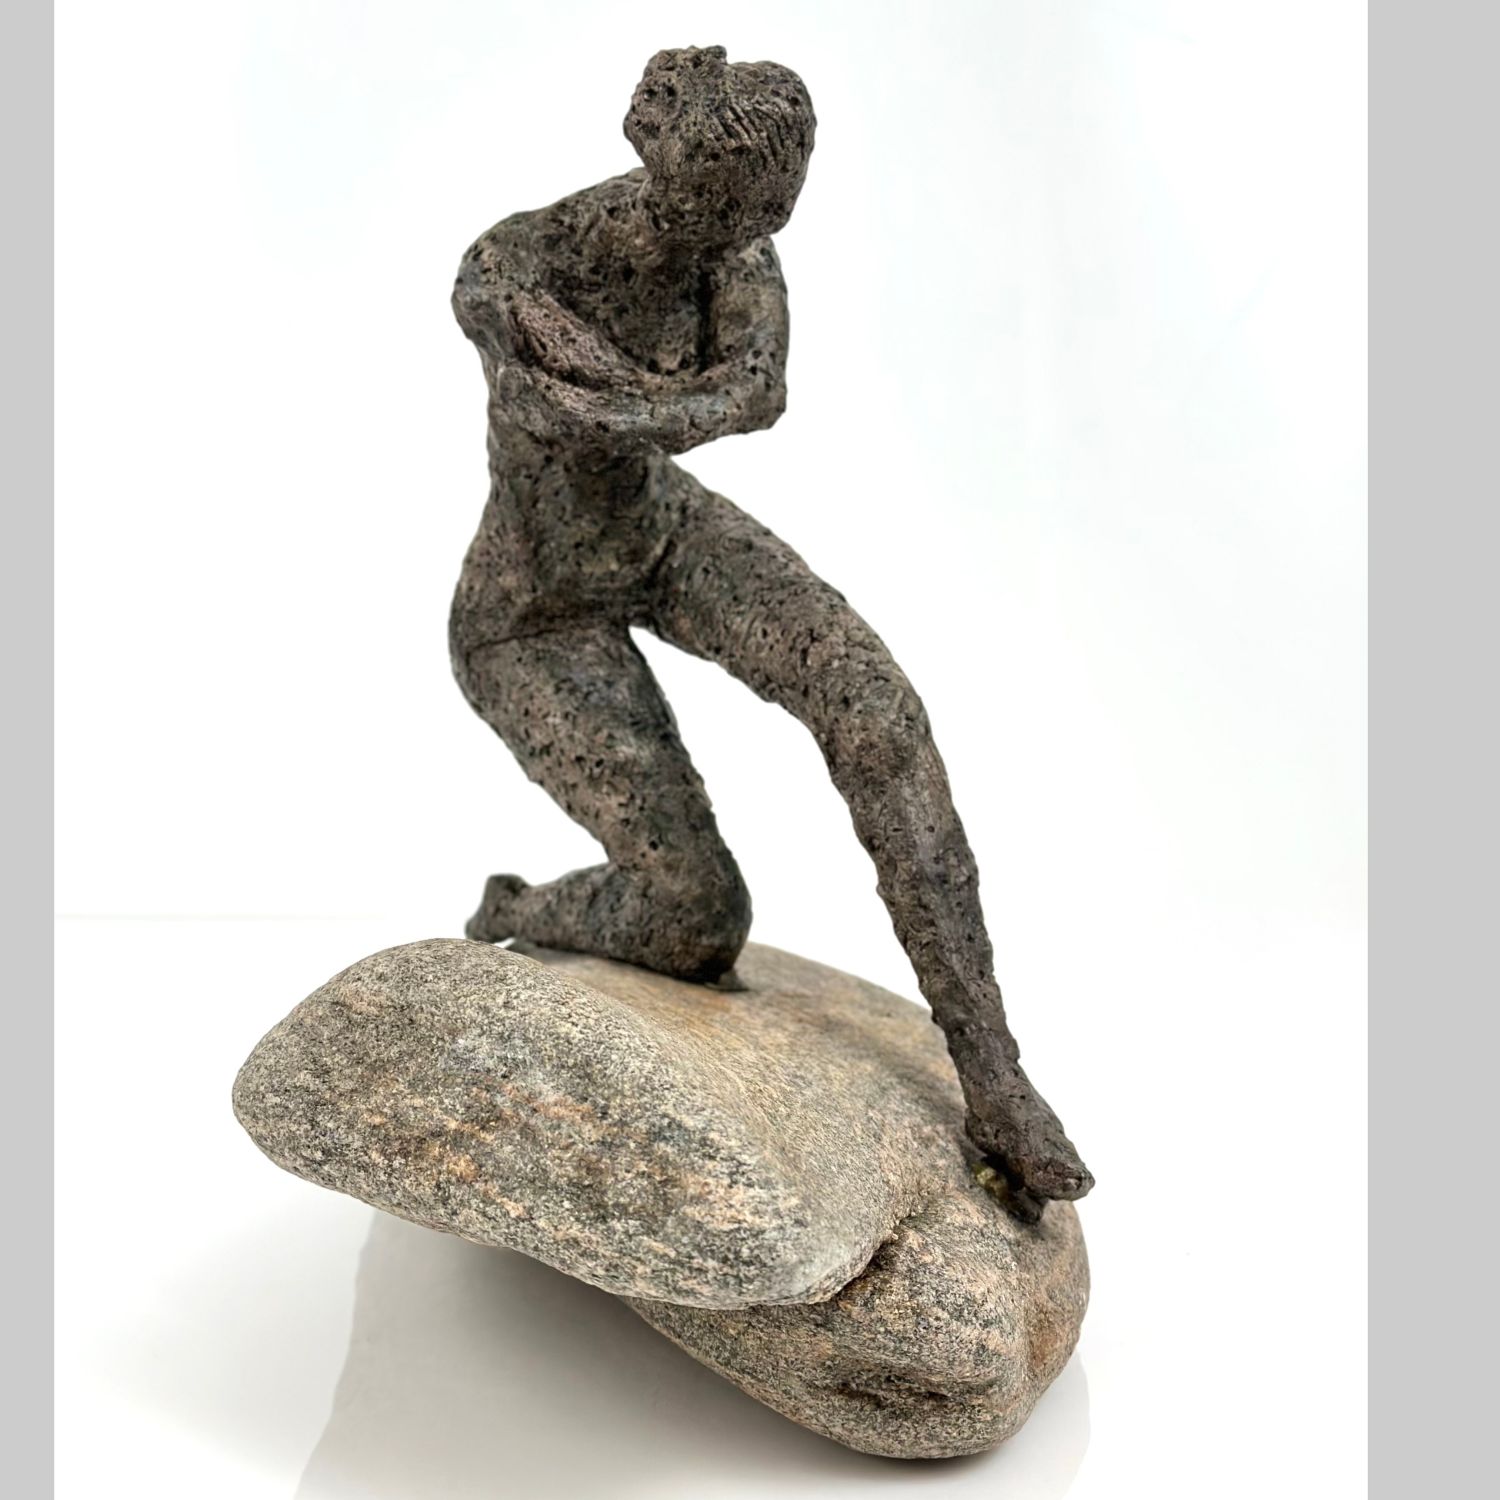 Catharina Goldnau: Kneeling Female on a Rock Product Image 3 of 4